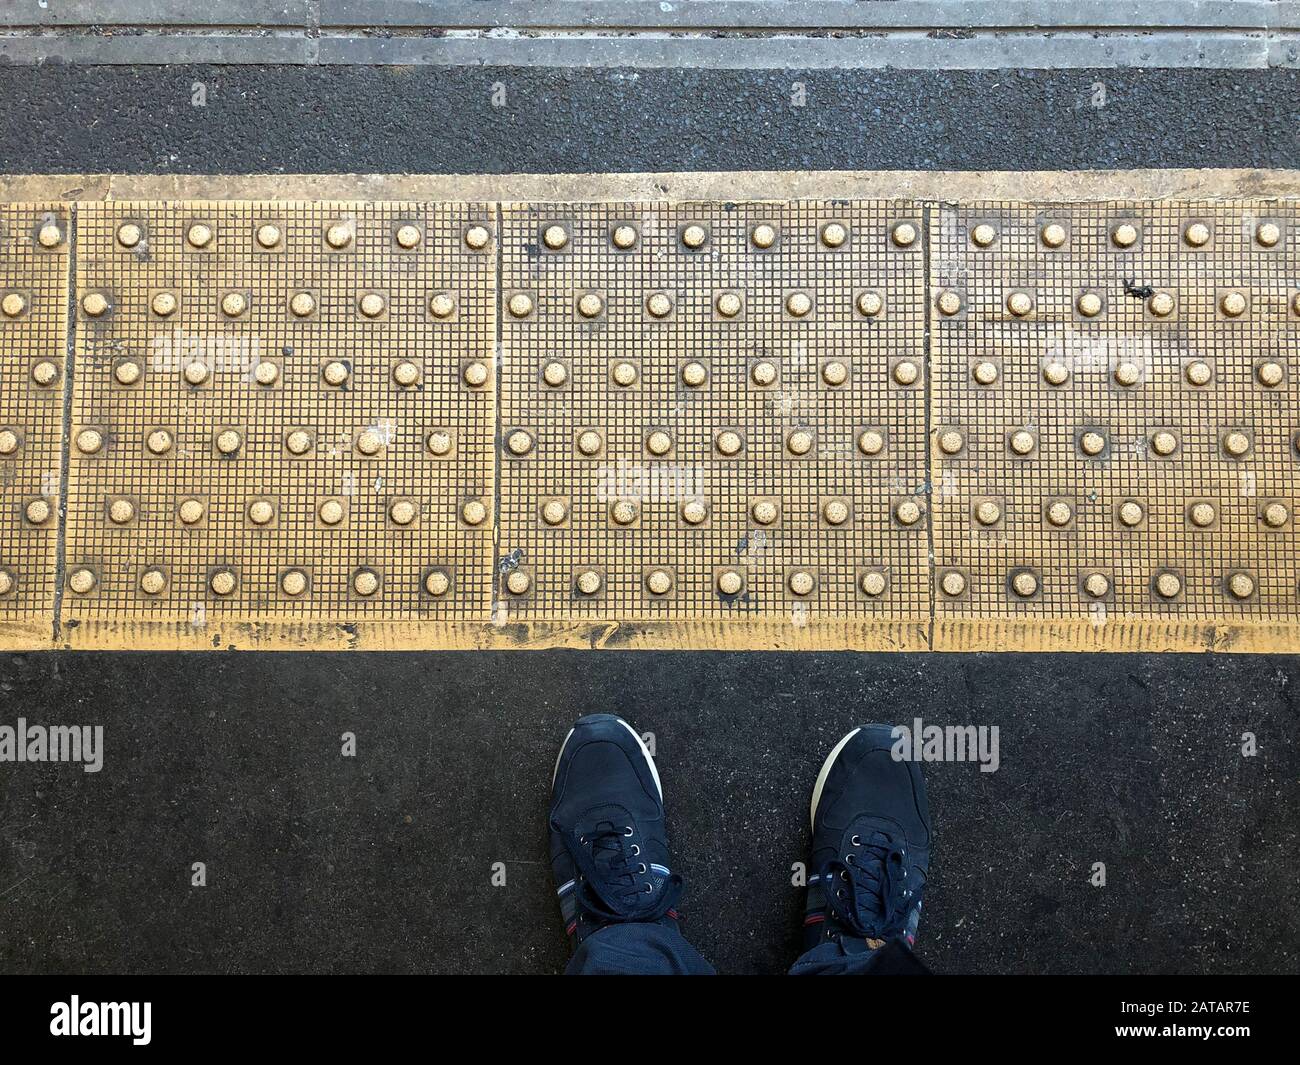 london underground platform shoes